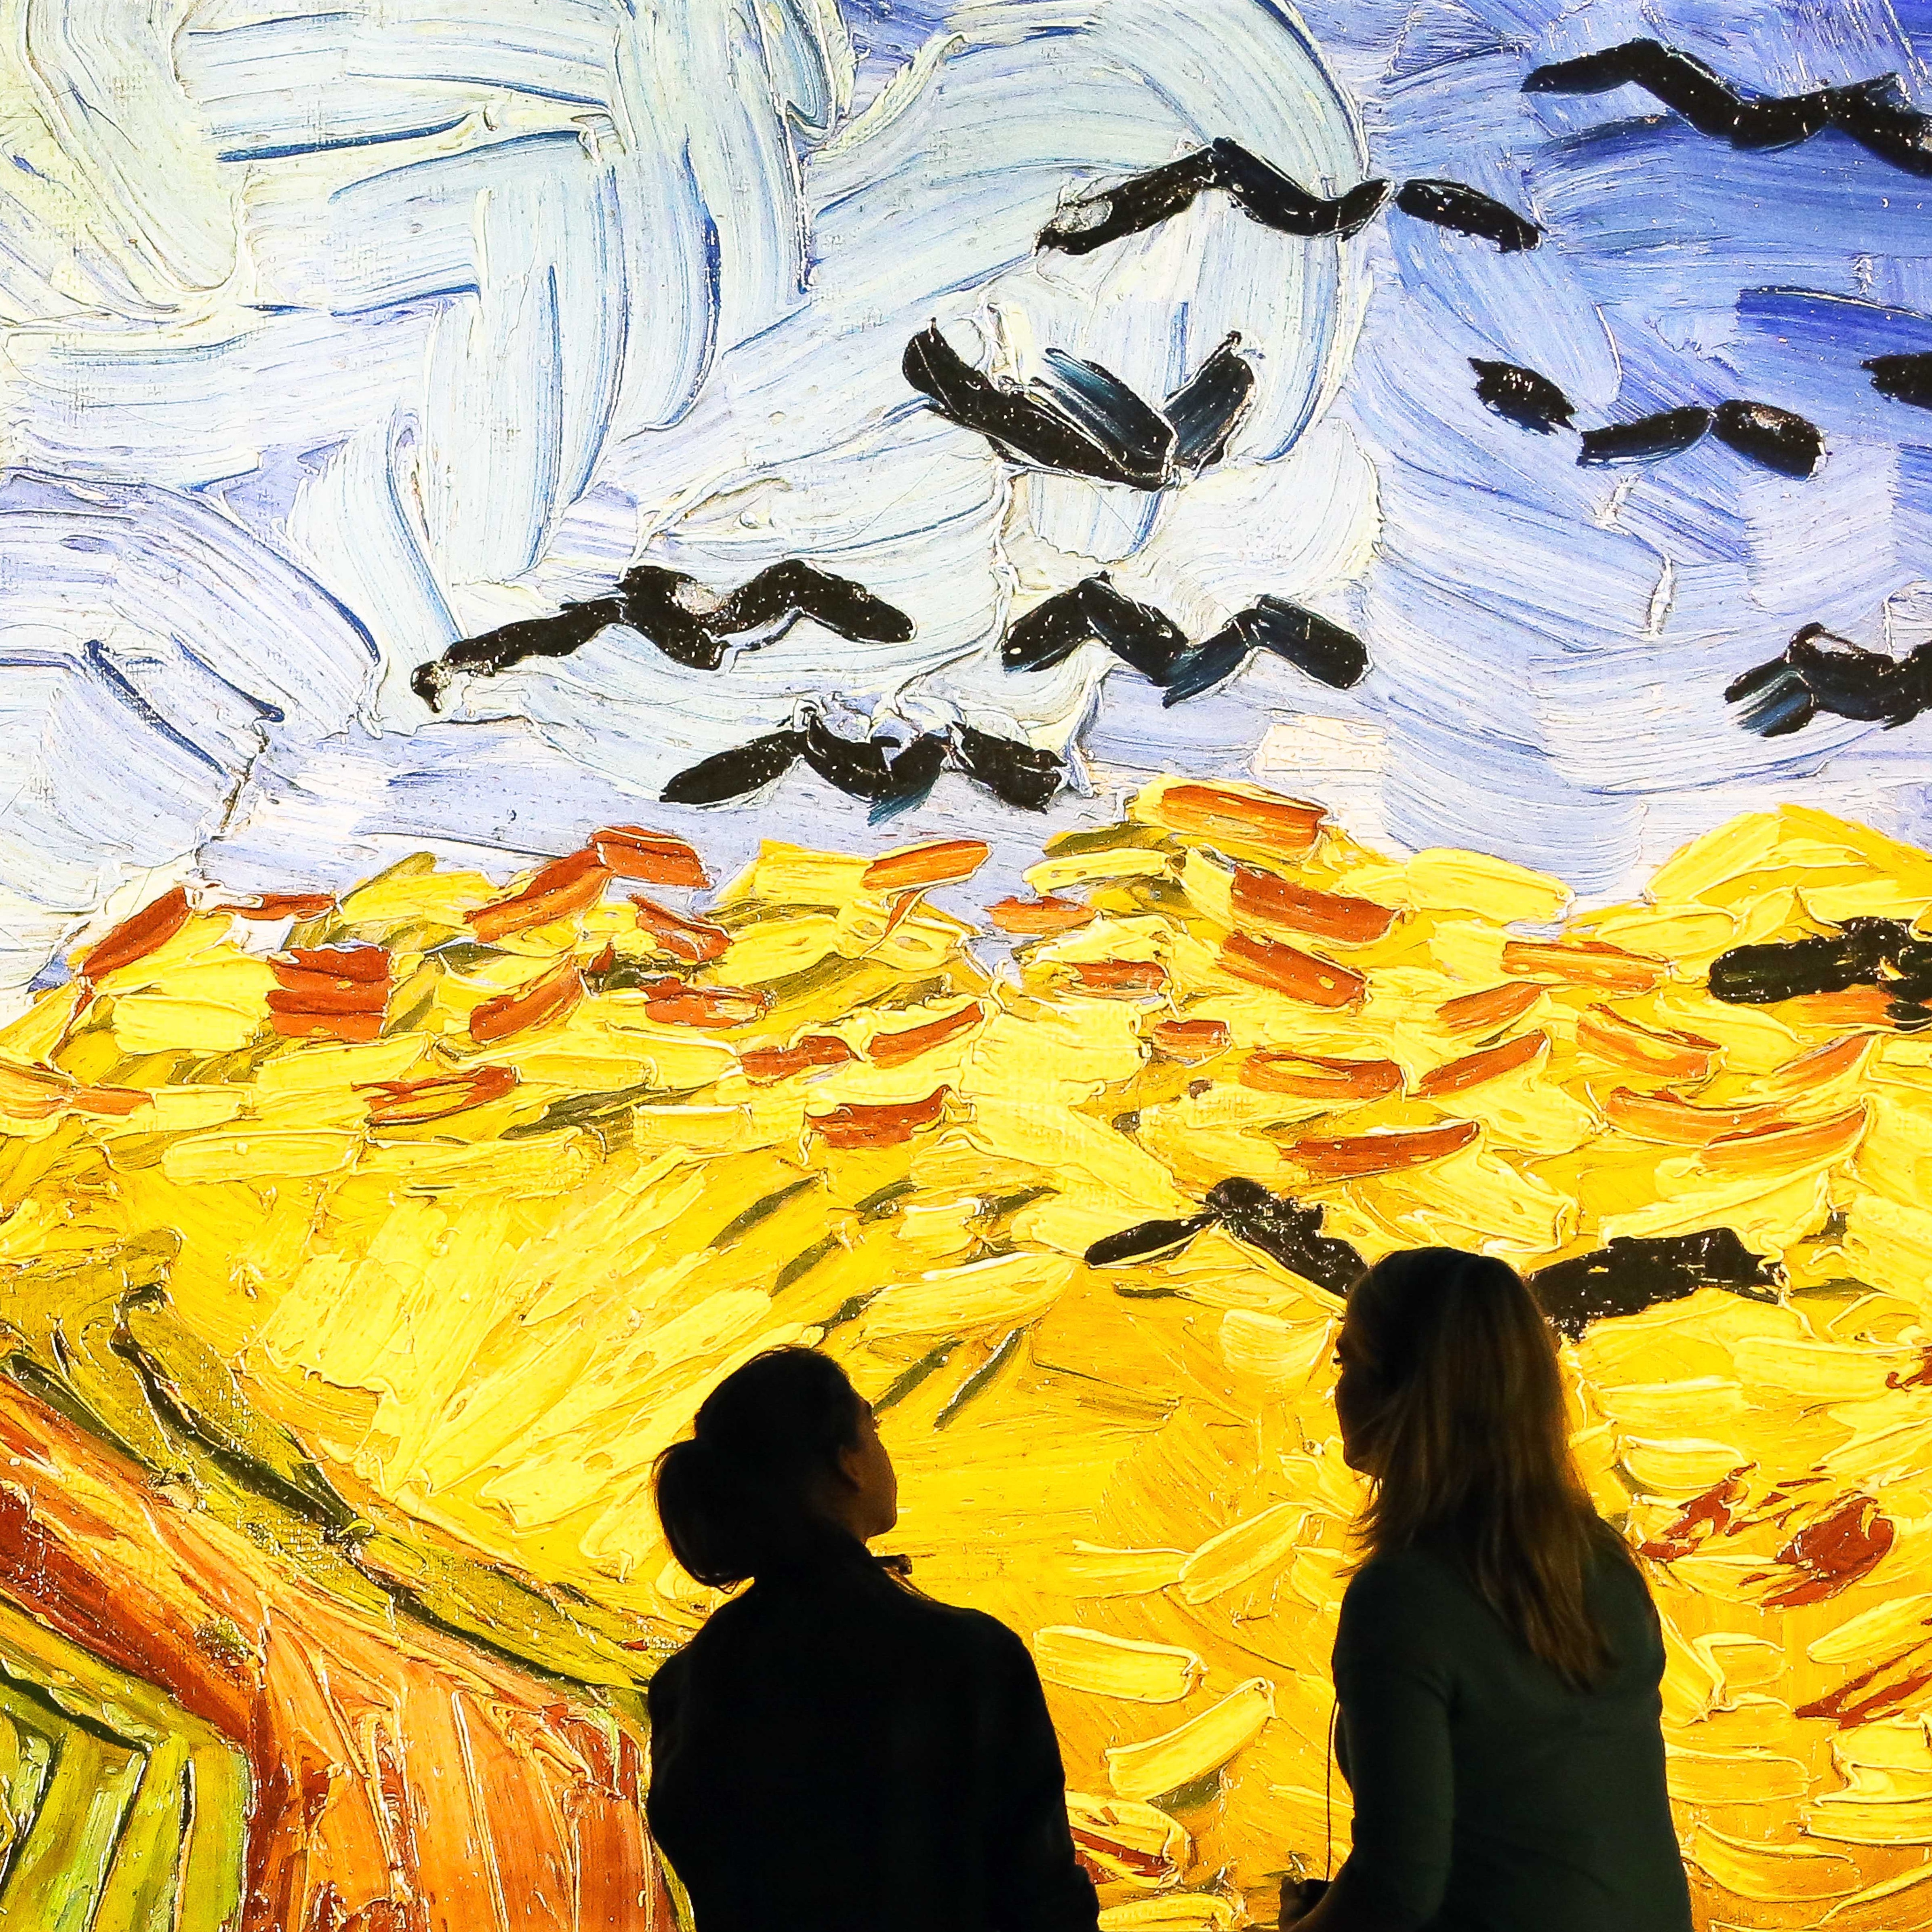 Installation view of Meet Vincent van Gogh